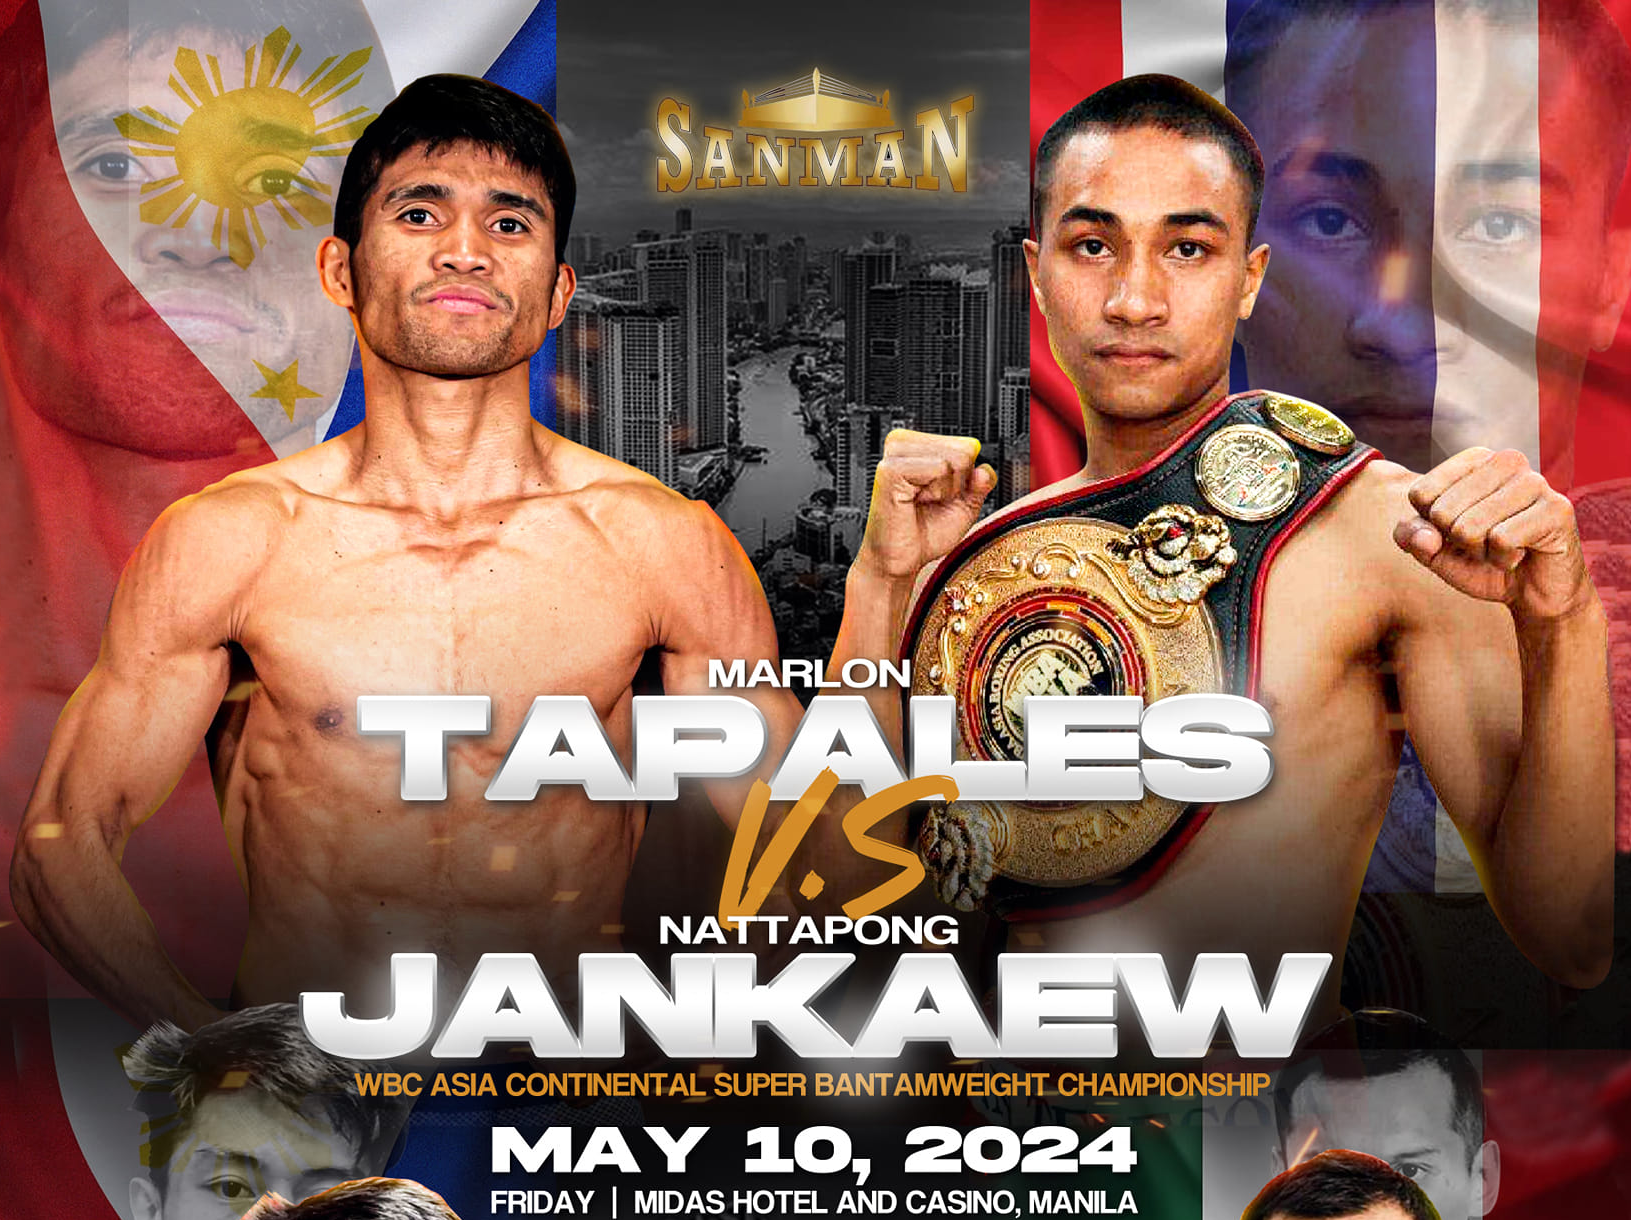 Marlon Tapales vs Nattapong Jankaew Live Stream, Start Time, Fight Card & TV Channel Info